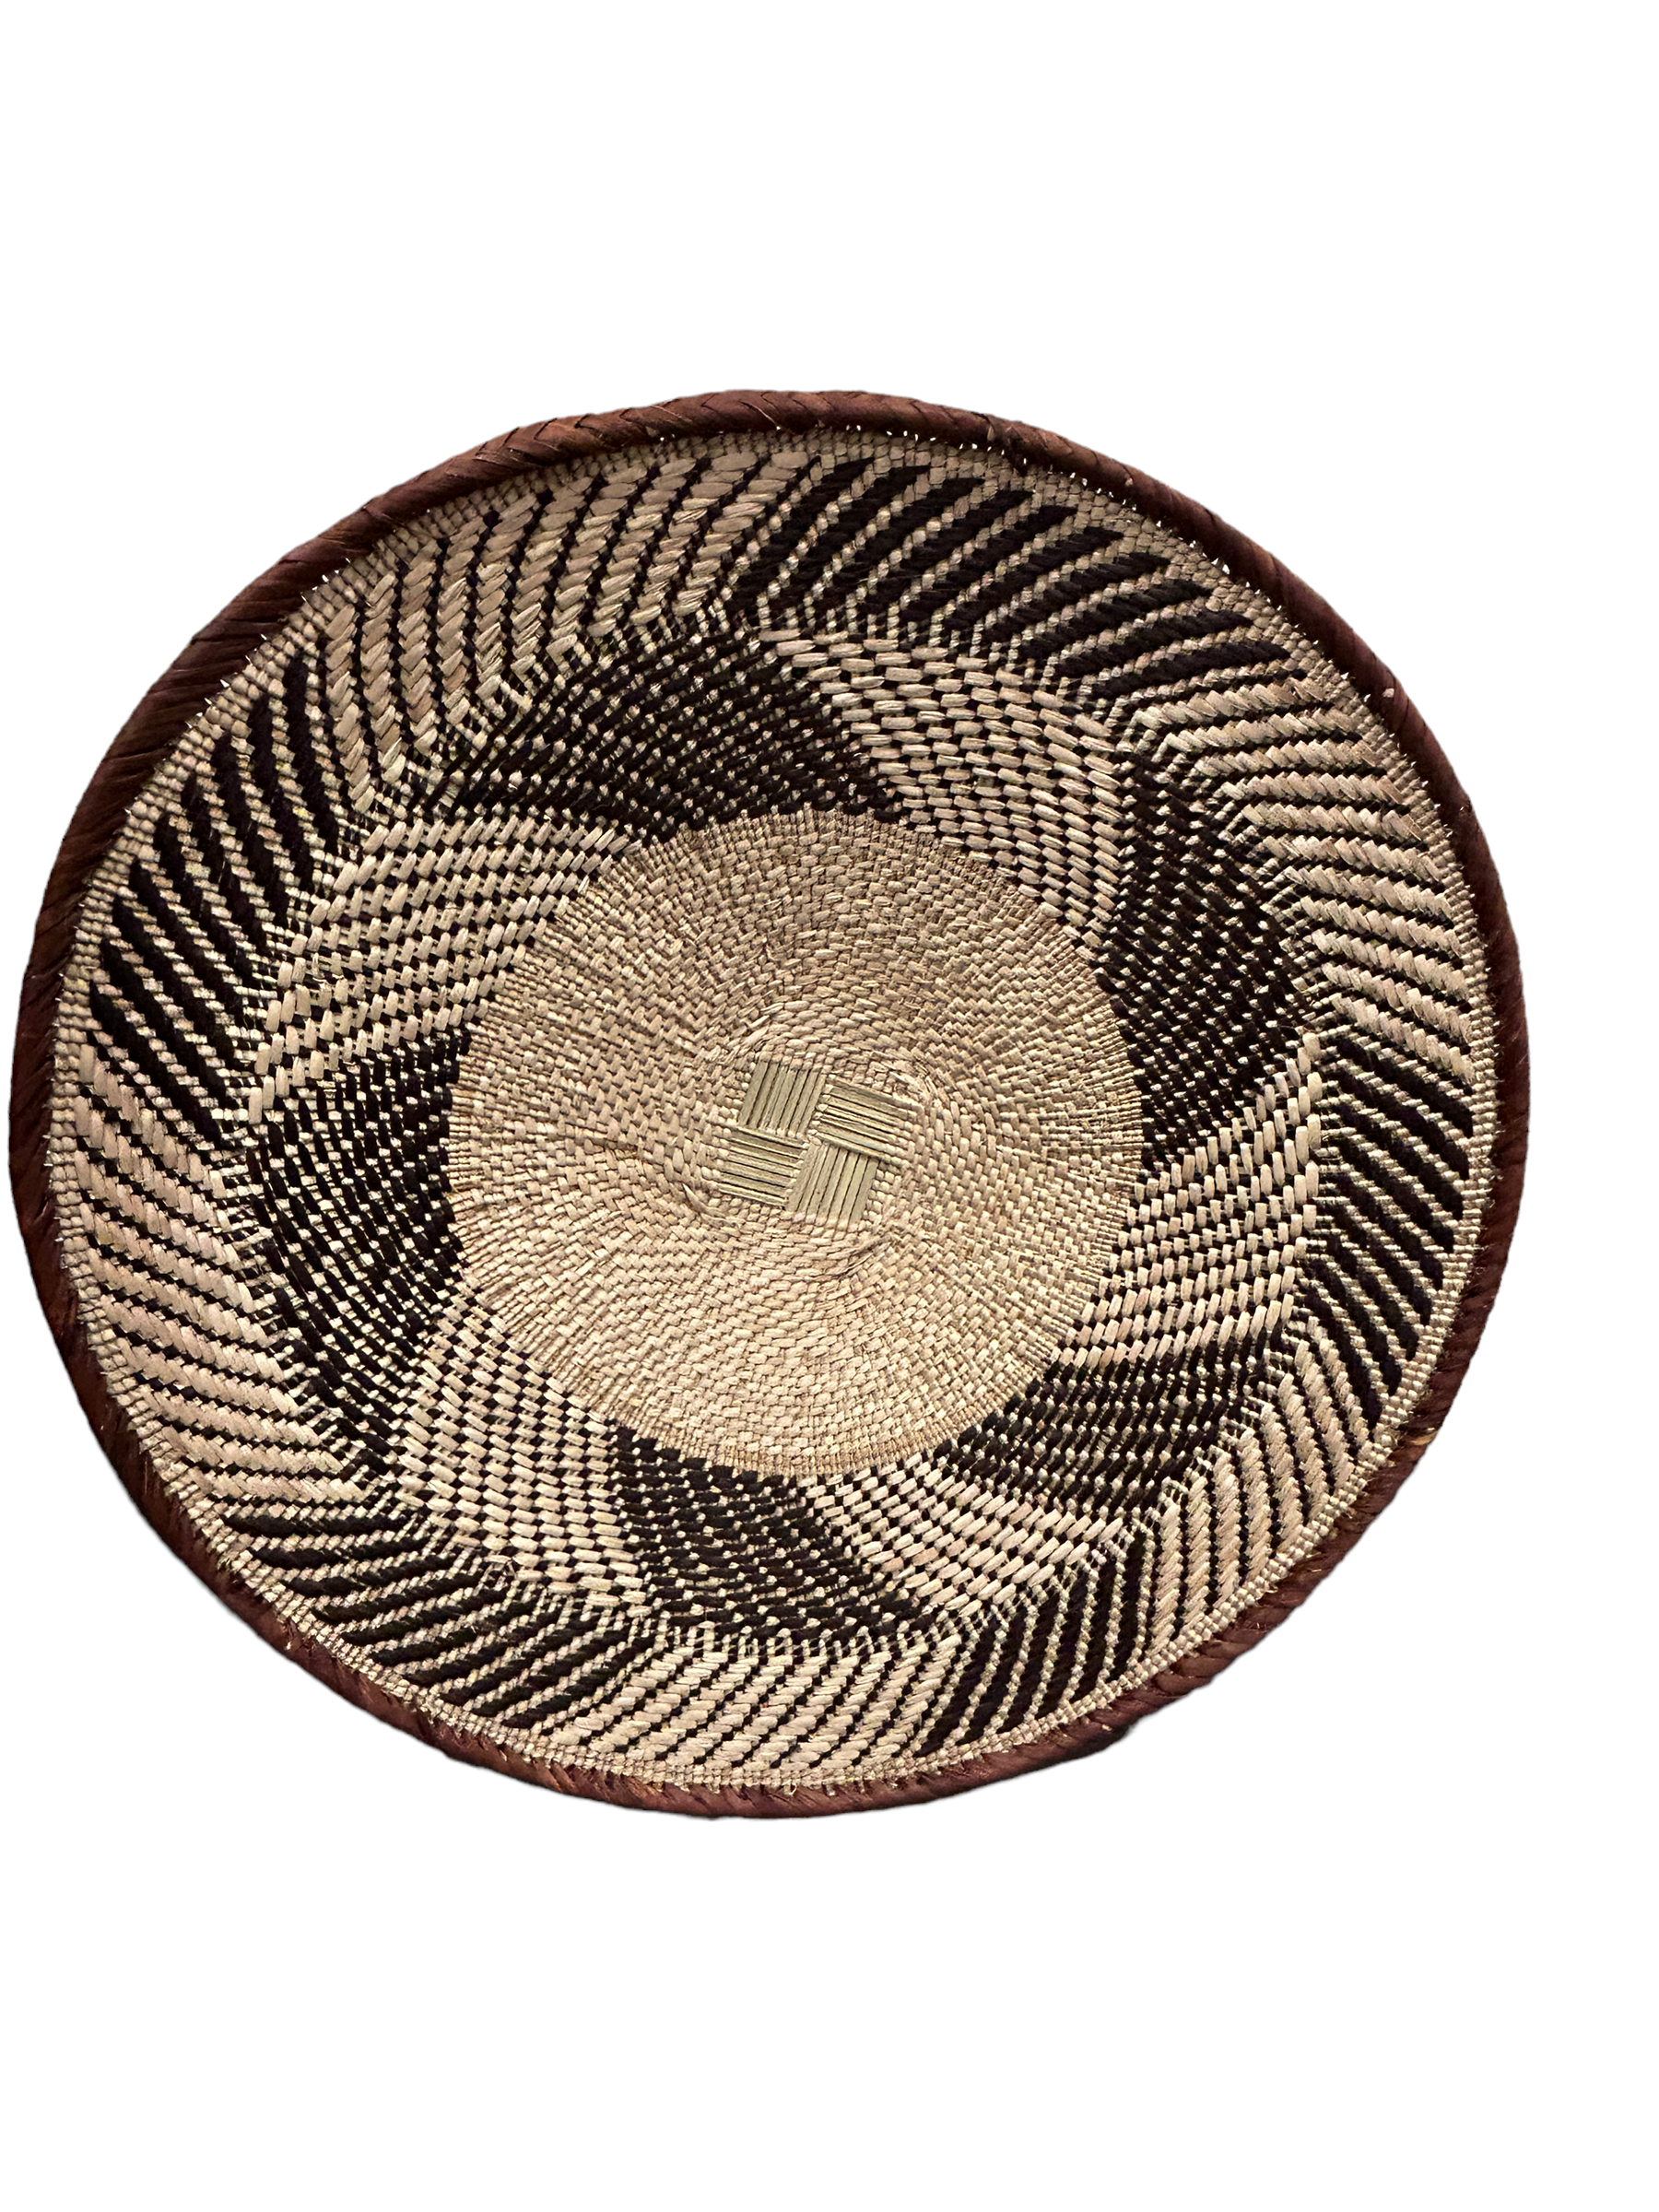 botanicalboysuk Tonga Basket Natural (50-11)